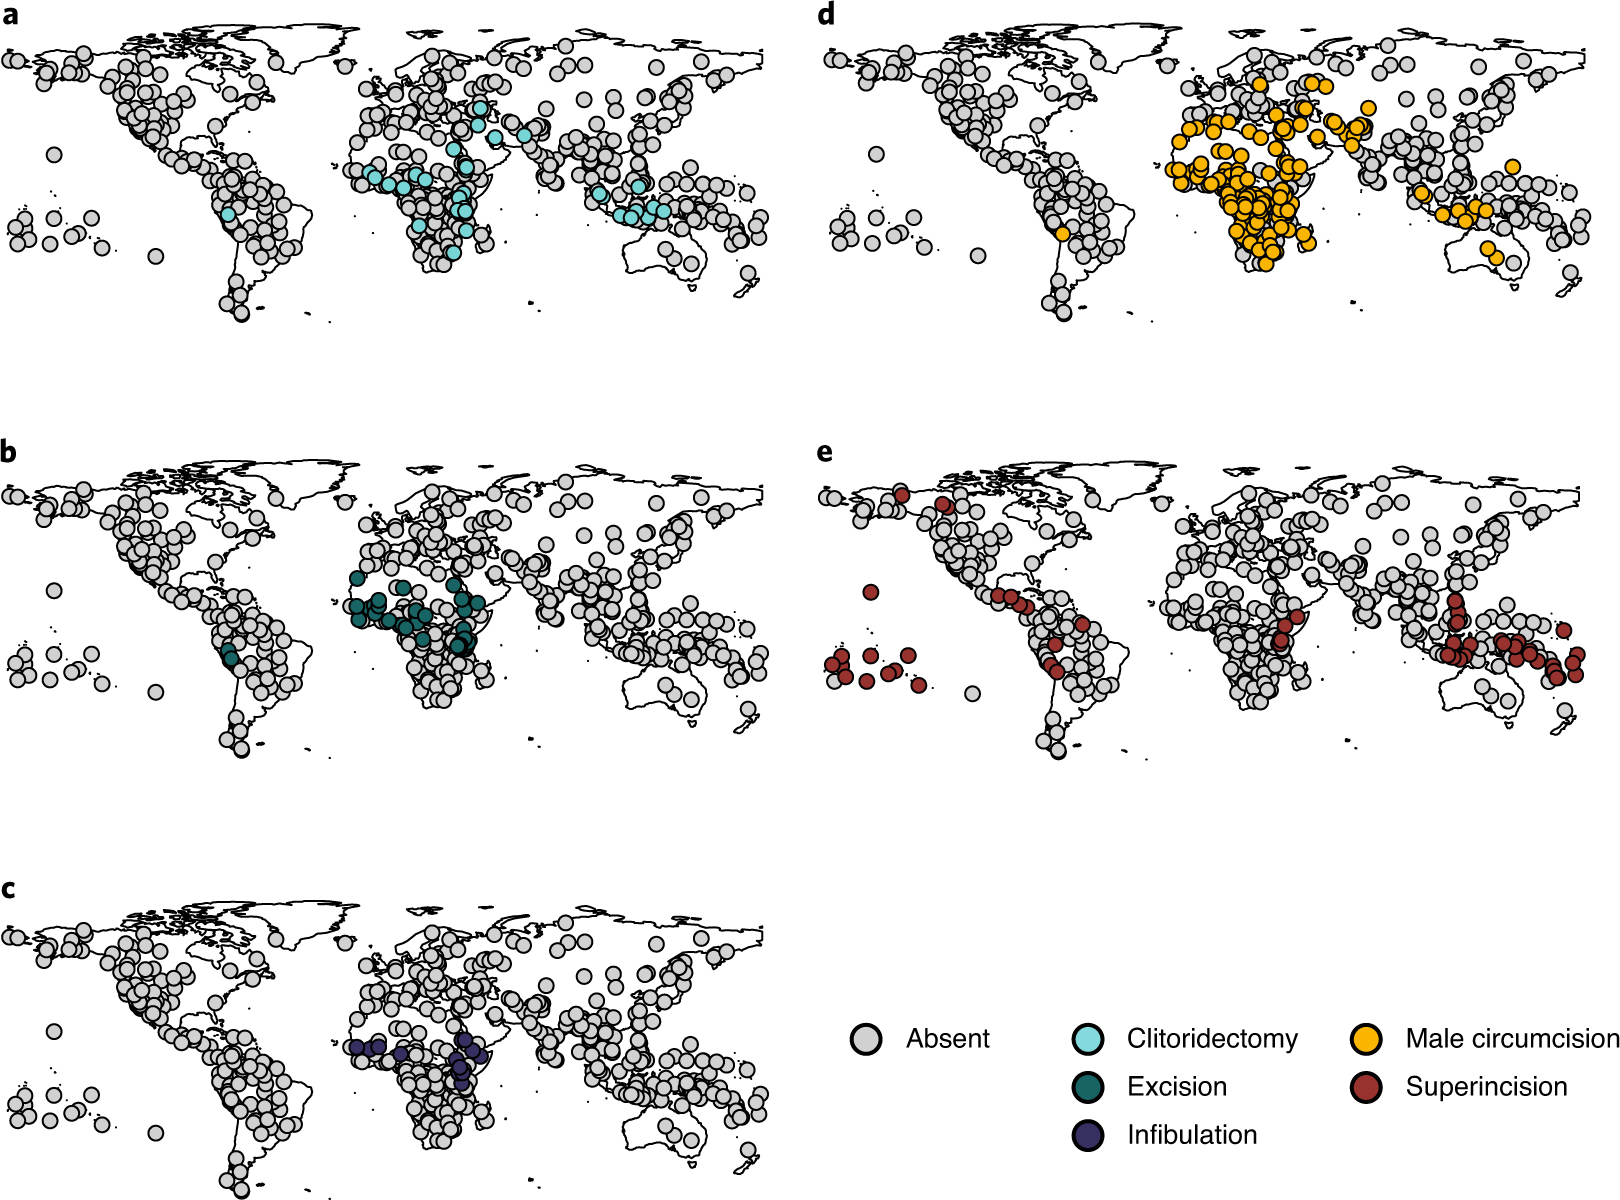 Global phylogenetic analysis reveals multiple origins and correlates of genital mutilation/cutting Nature Human Behaviour